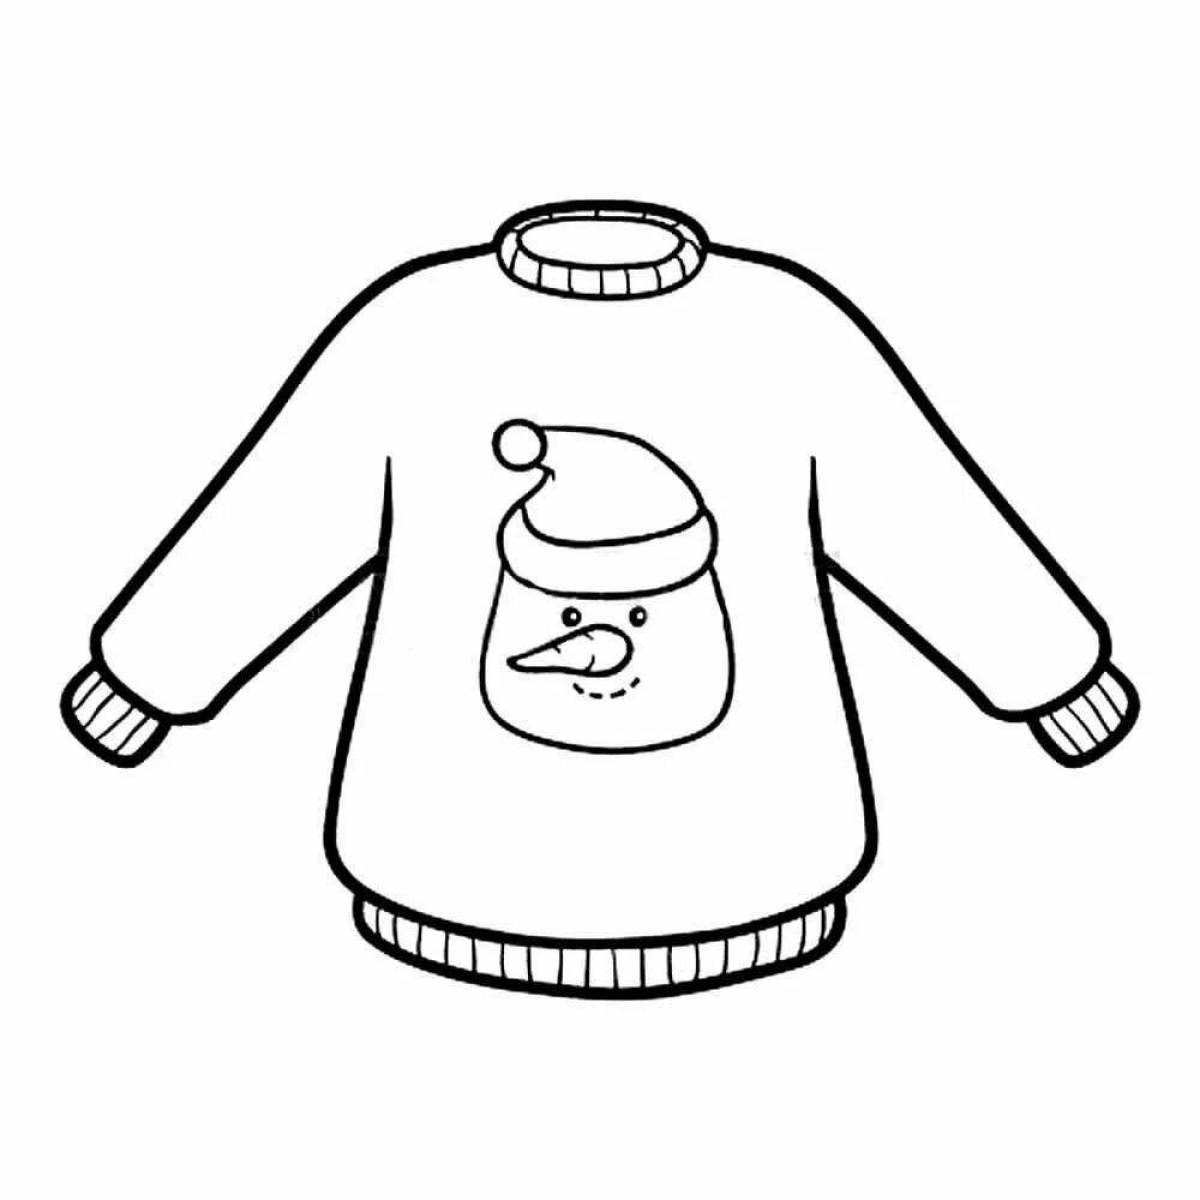 Coloring cute sweater for preschoolers